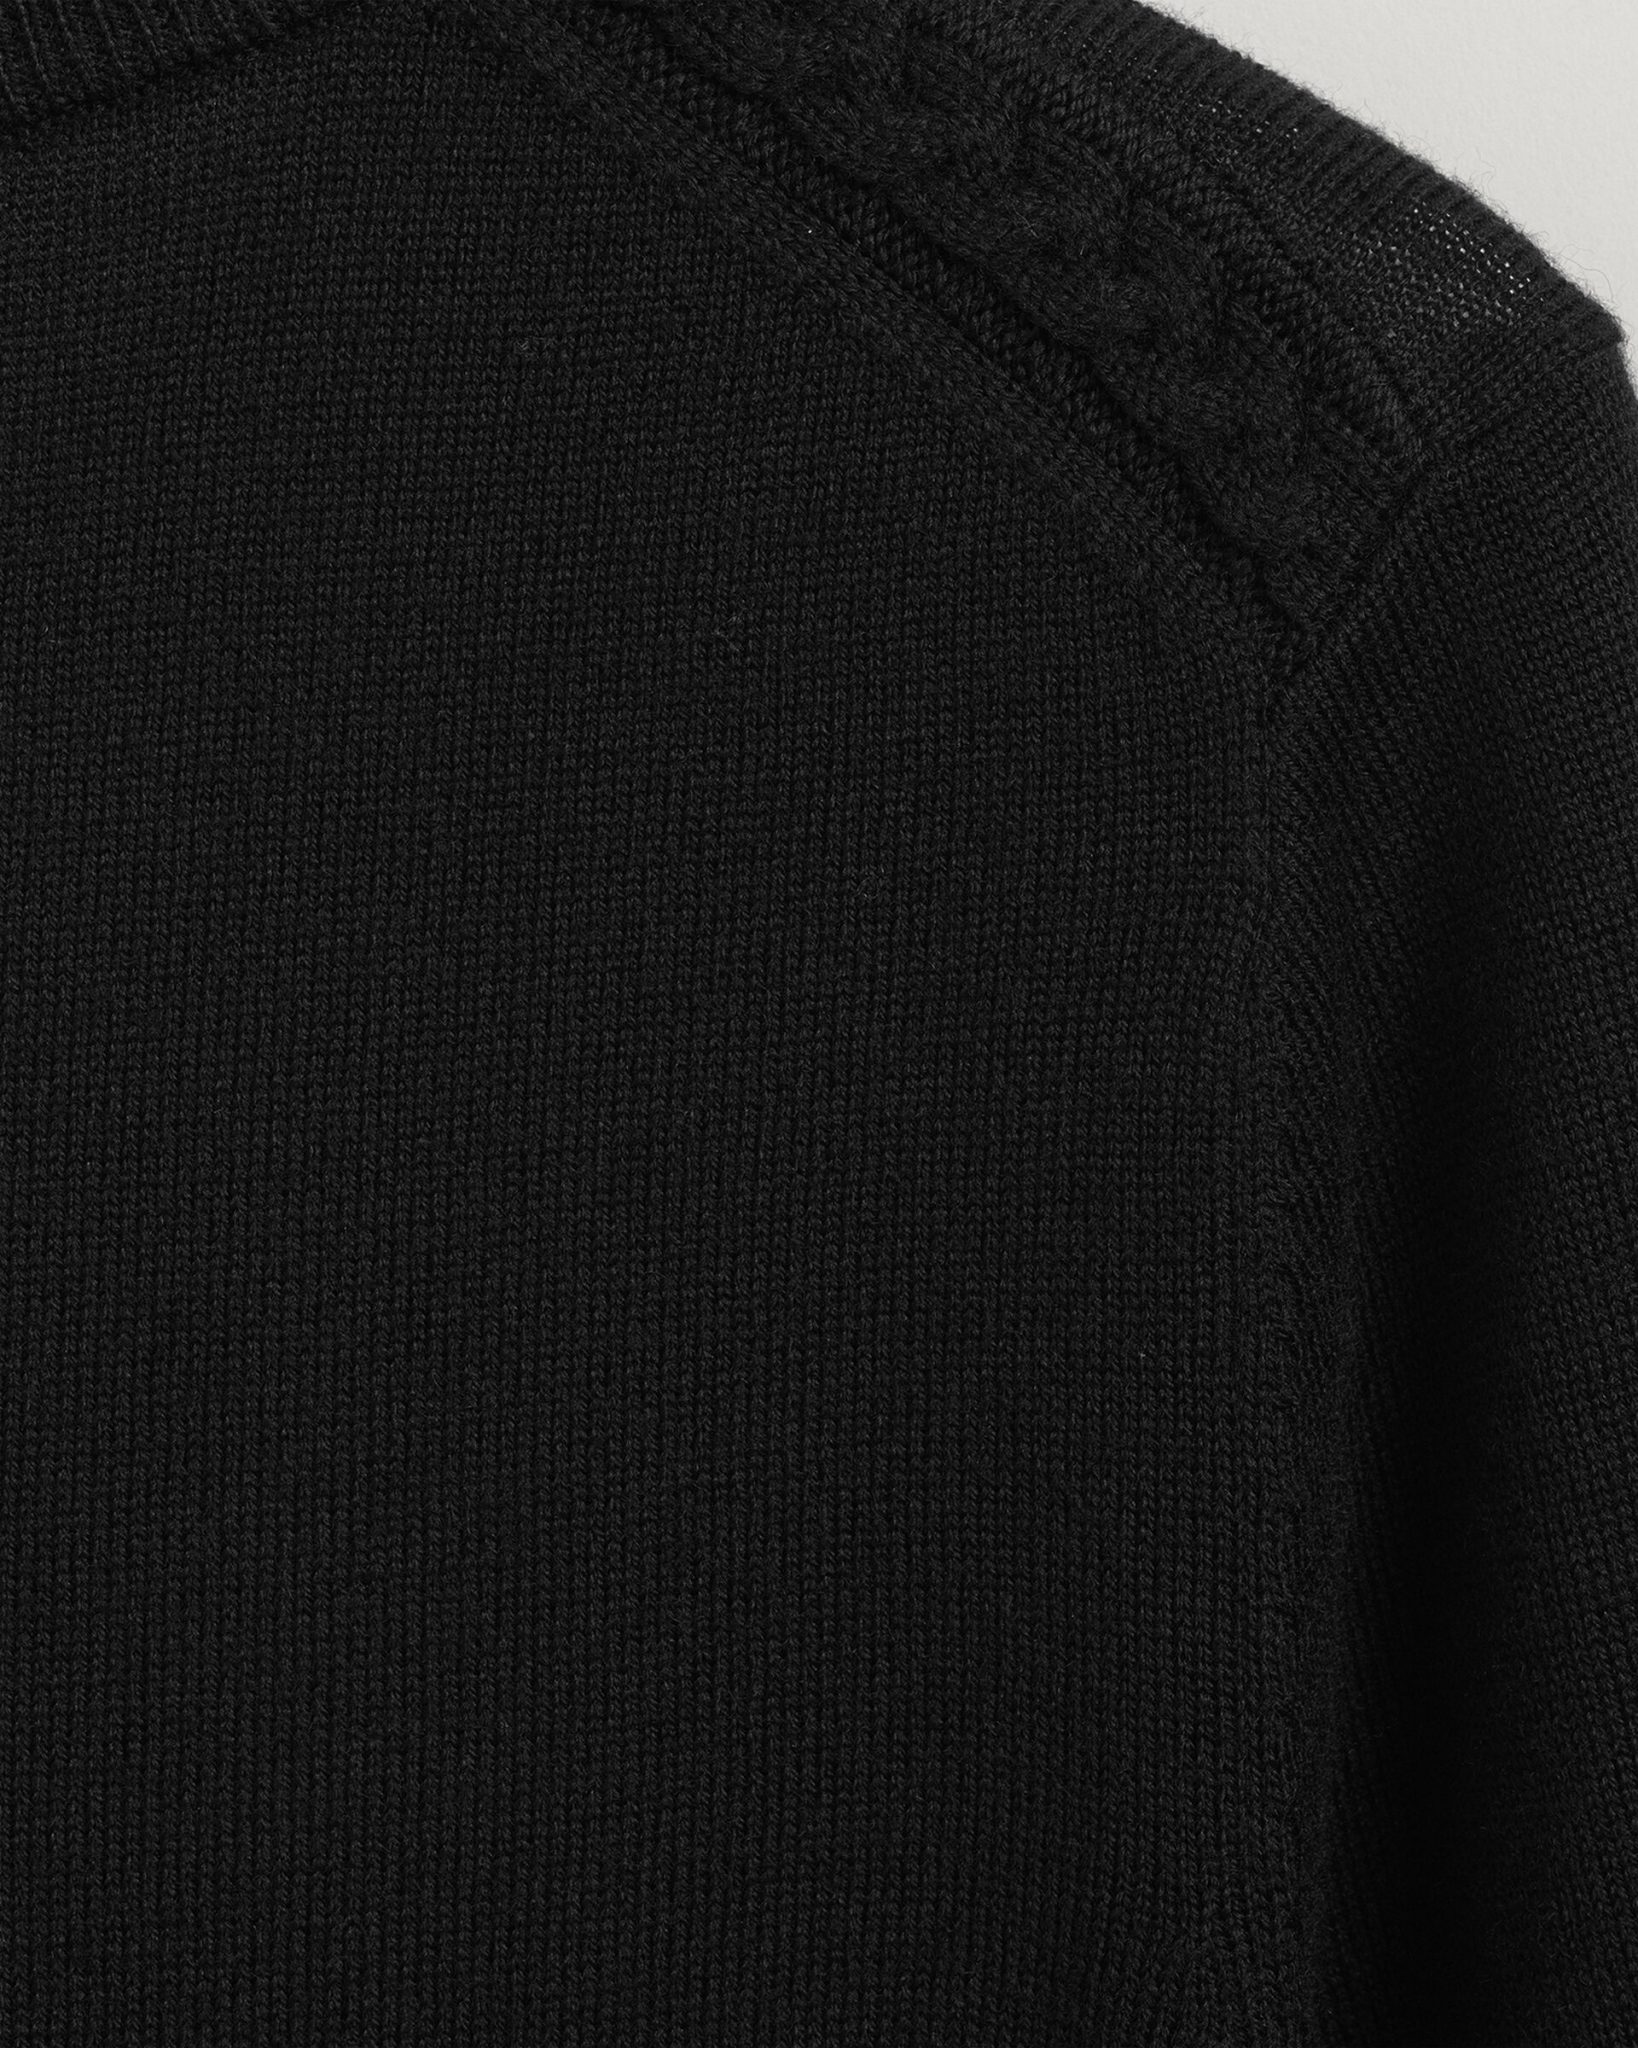 Buy Gant Woman Merino Wool Dress Black - Scandinavian Fashion Store